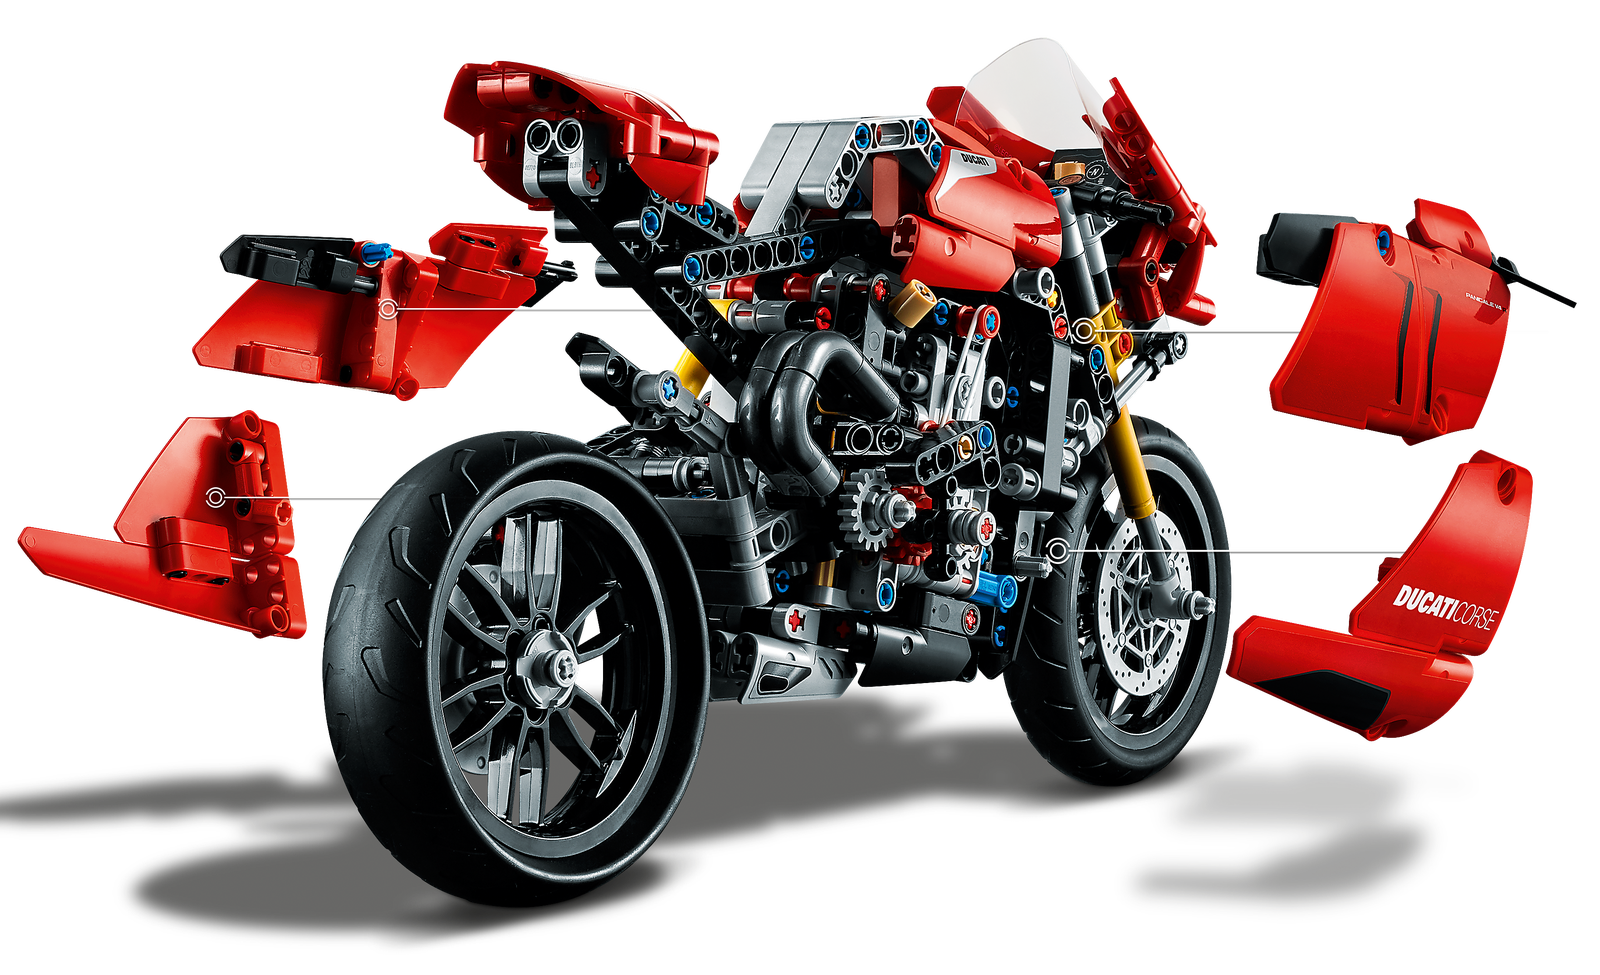 Lego Technic Ducati Panigale V4 R Technic 42107